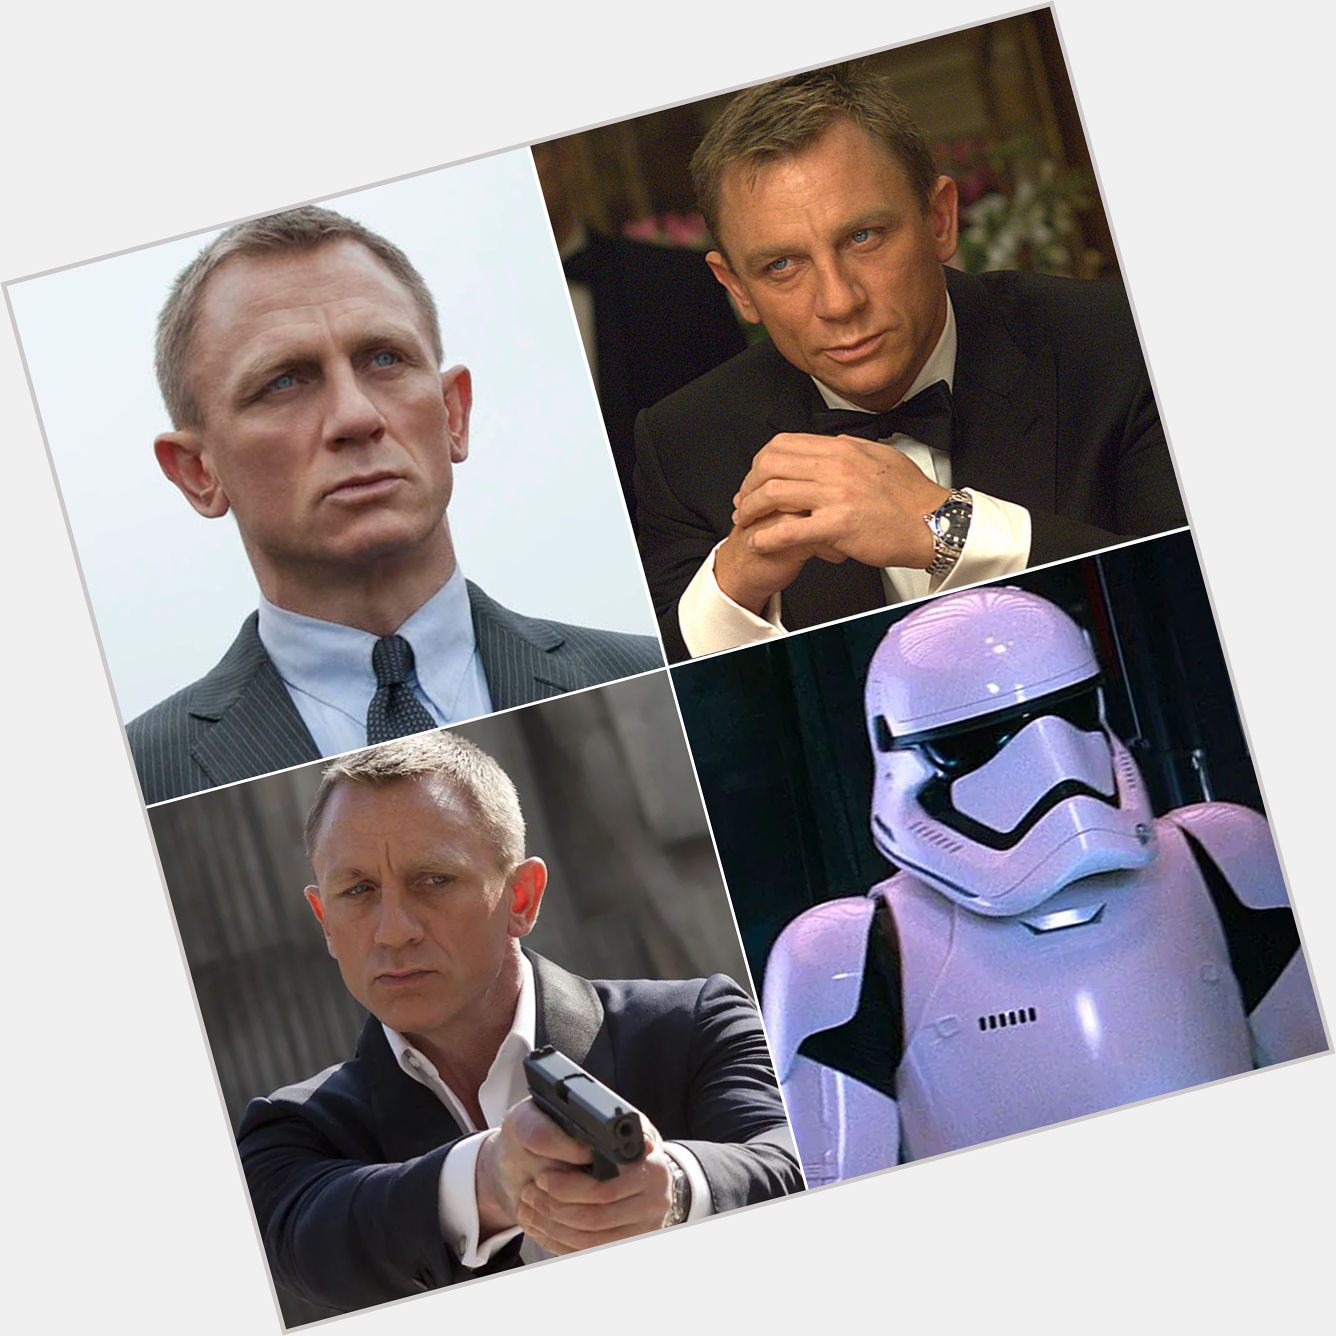 Happy birthday to our favorite Bond, Daniel Craig 